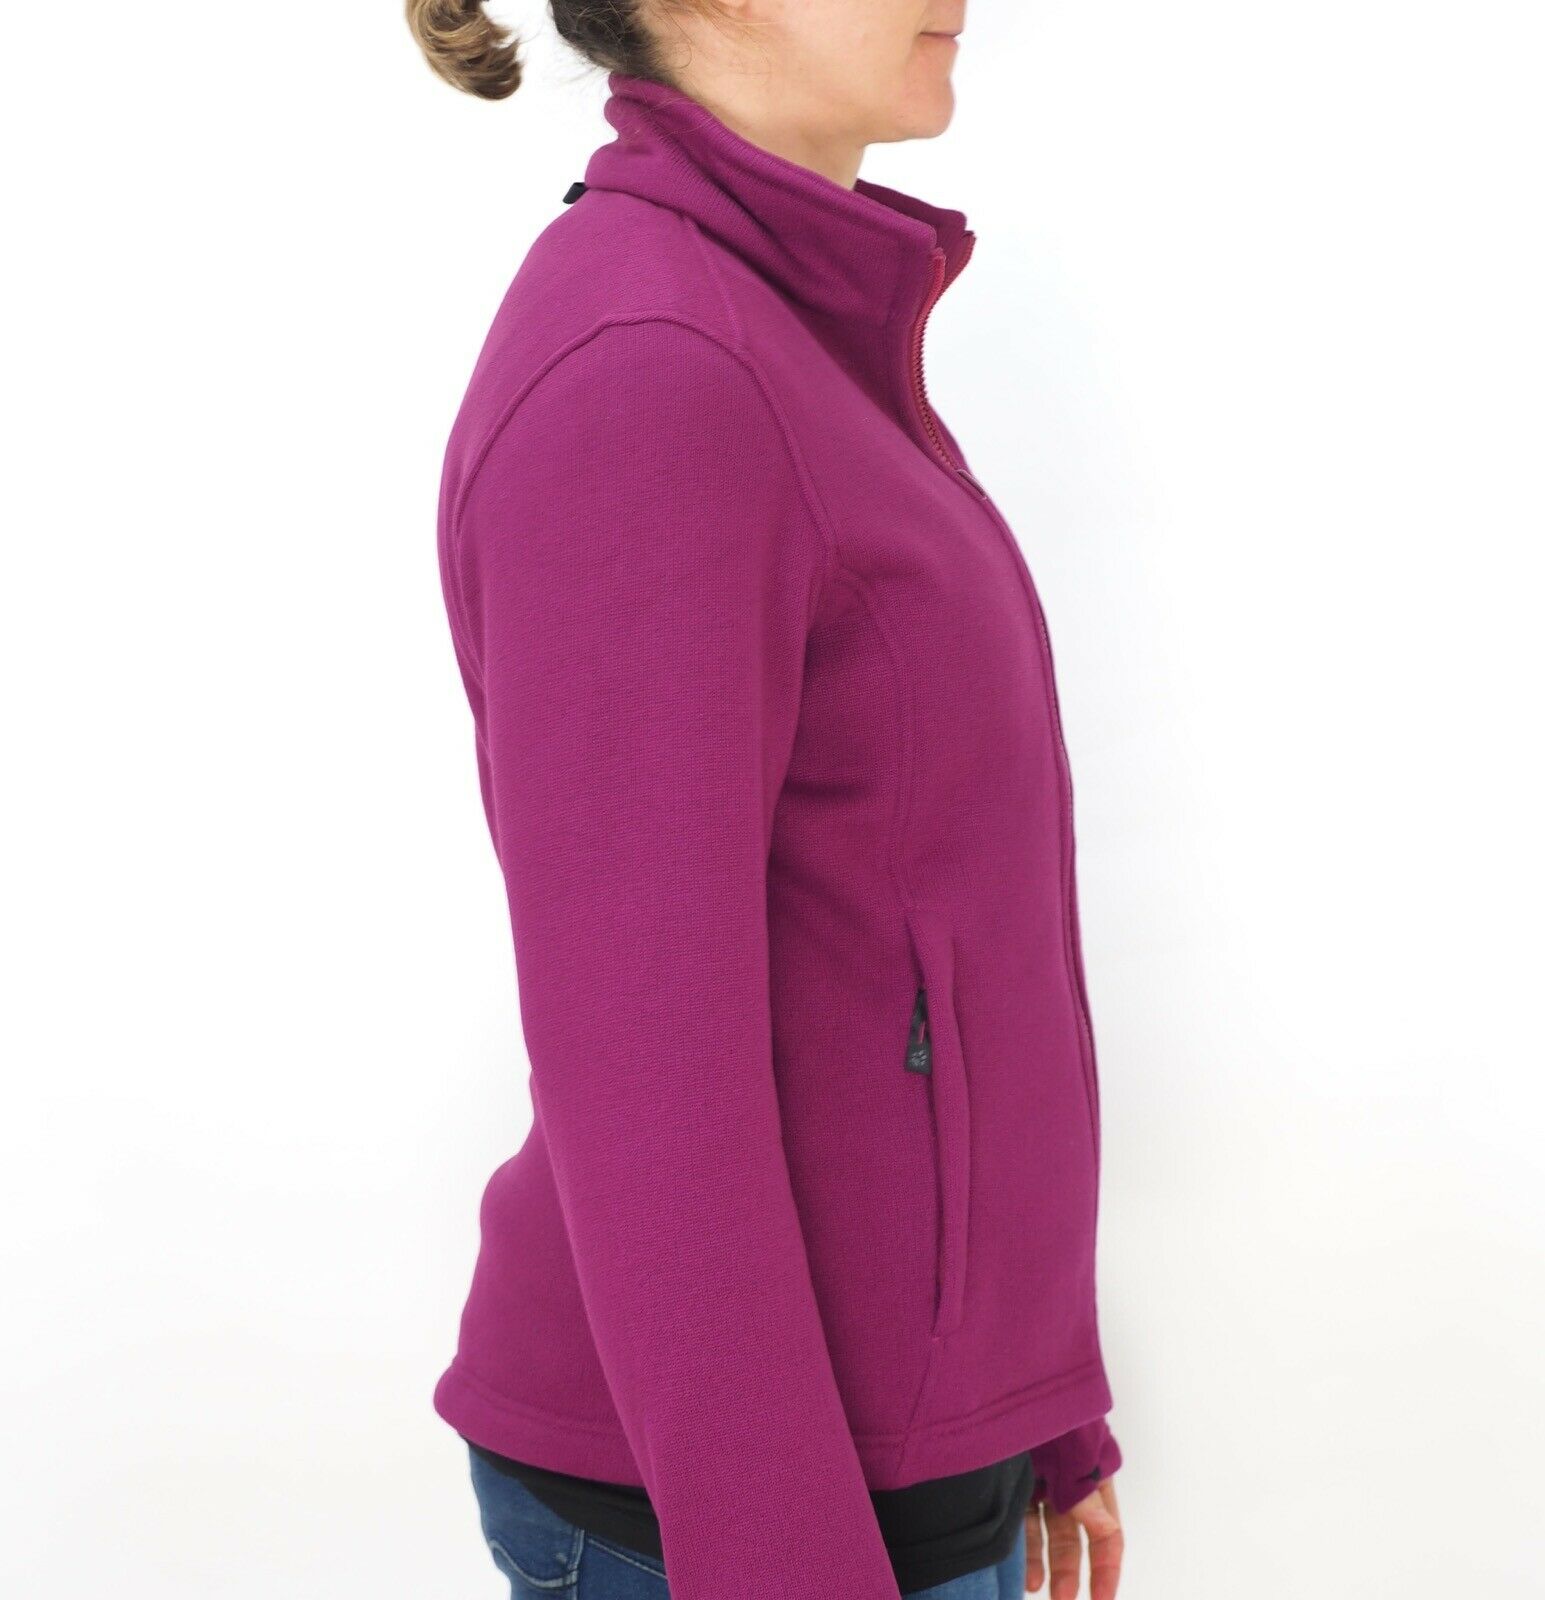 Womens Jack Wolfskin Kinga 5018701 Wild Berry Zip Up Warm Fleece Sweatshirt - London Top Style